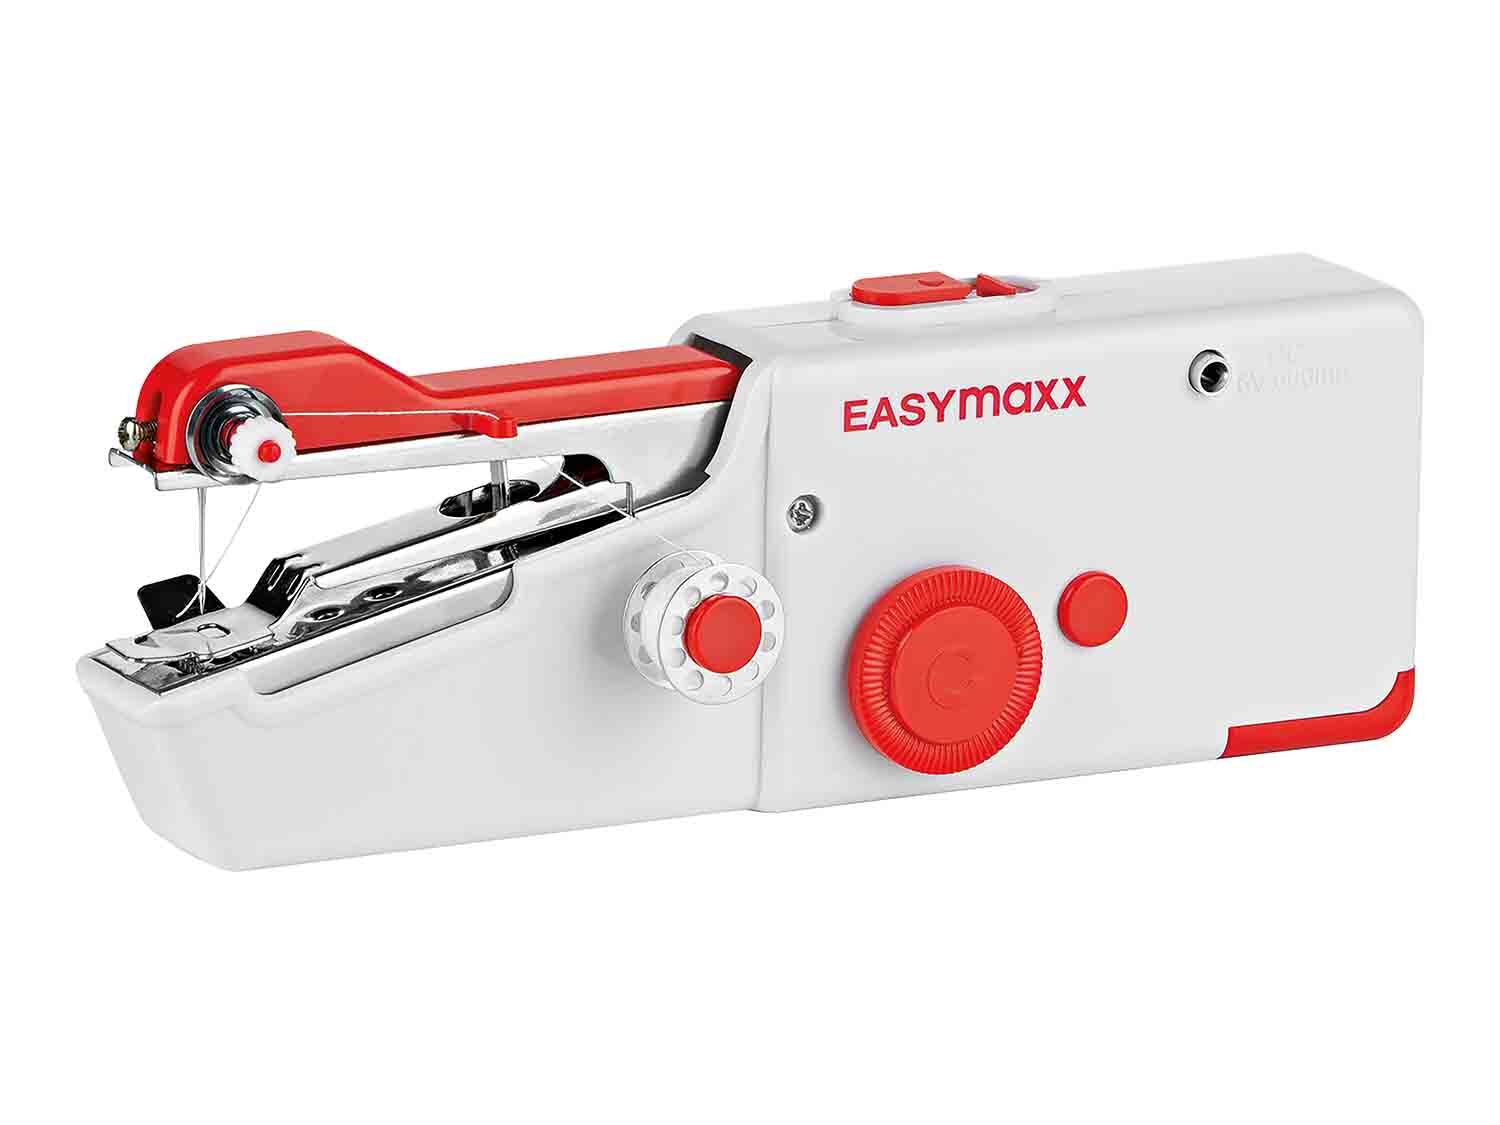 Easy maxx Máquina de coser manual